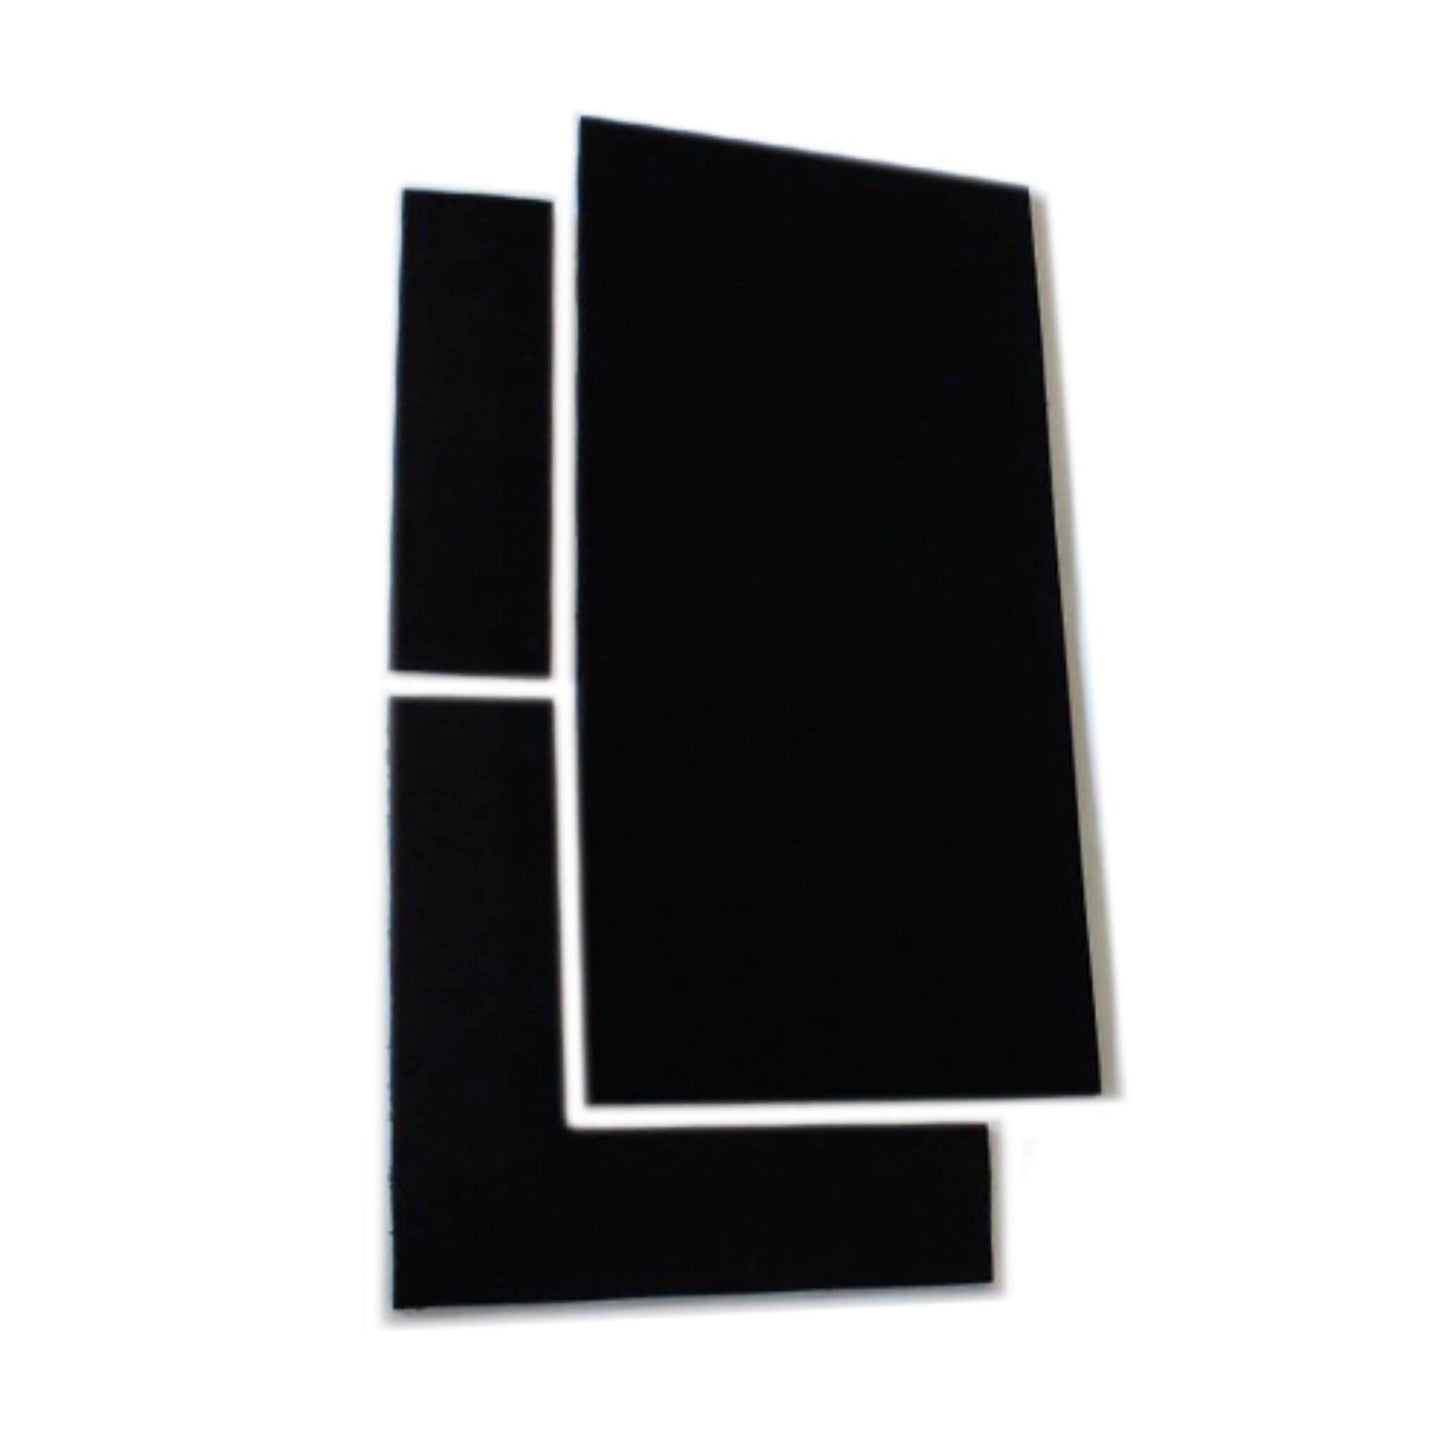 20mm Premium Black Rubber Gym Floor Tile ramped edge corner